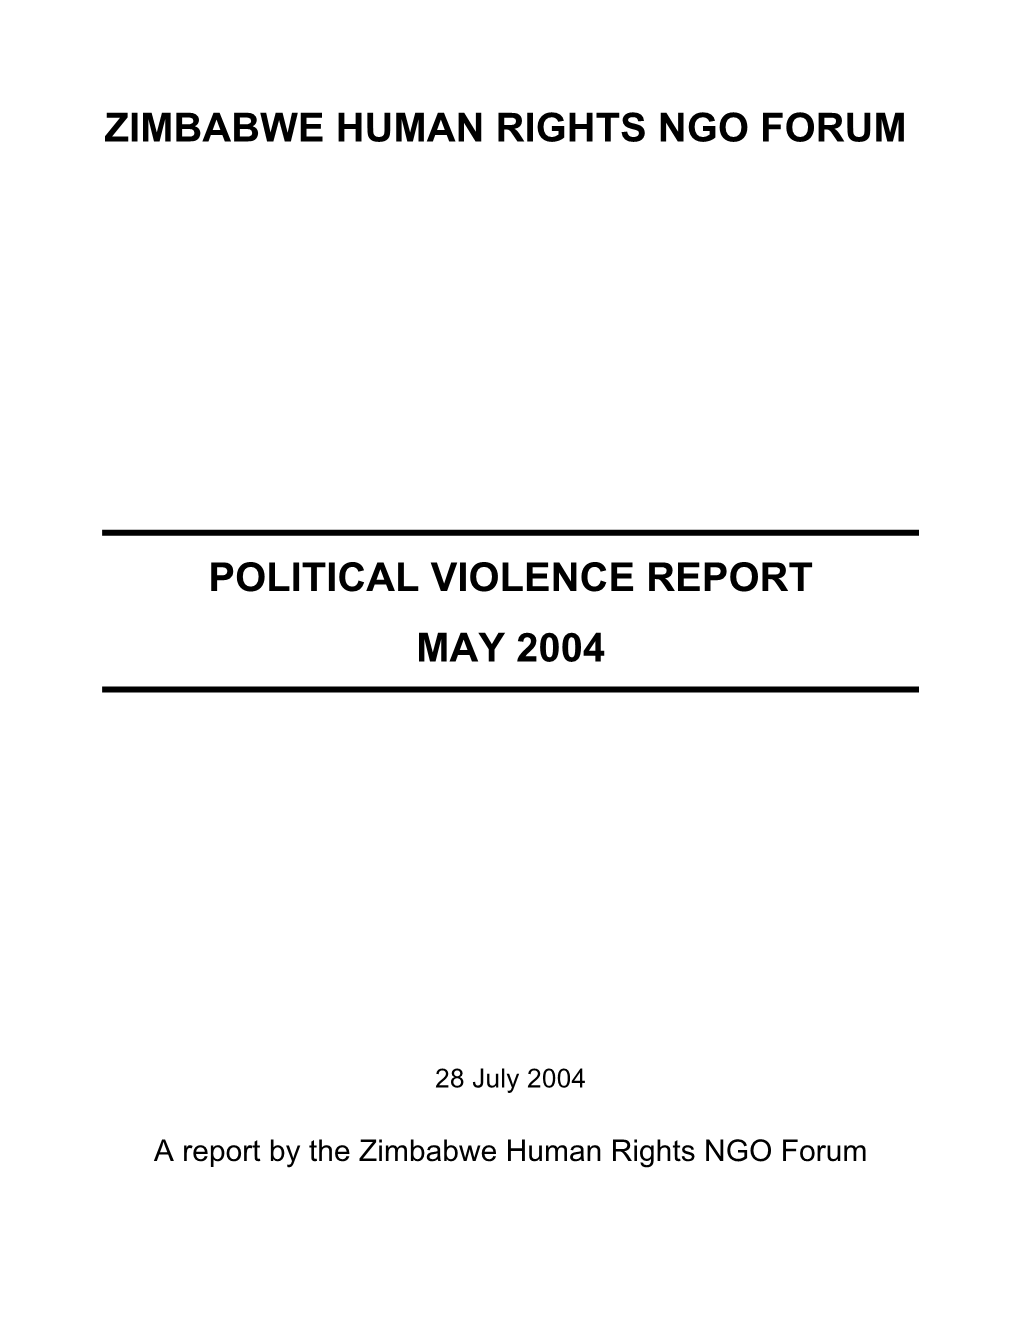 Zimbabwe Human Rights Ngo Forum Political Violence Report May 2004